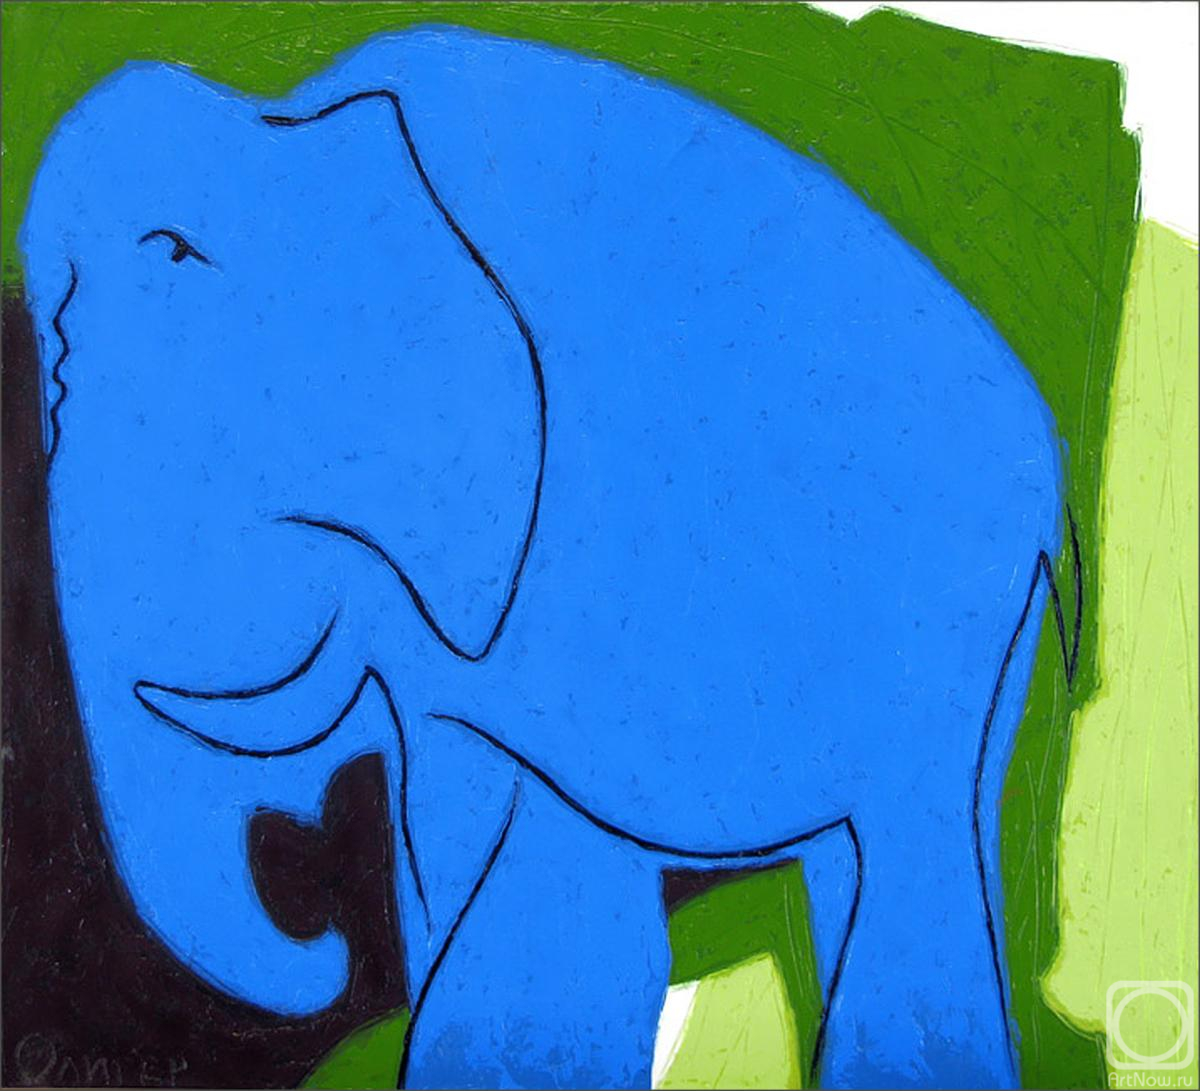 Oligerov Alexander. Blue elephant